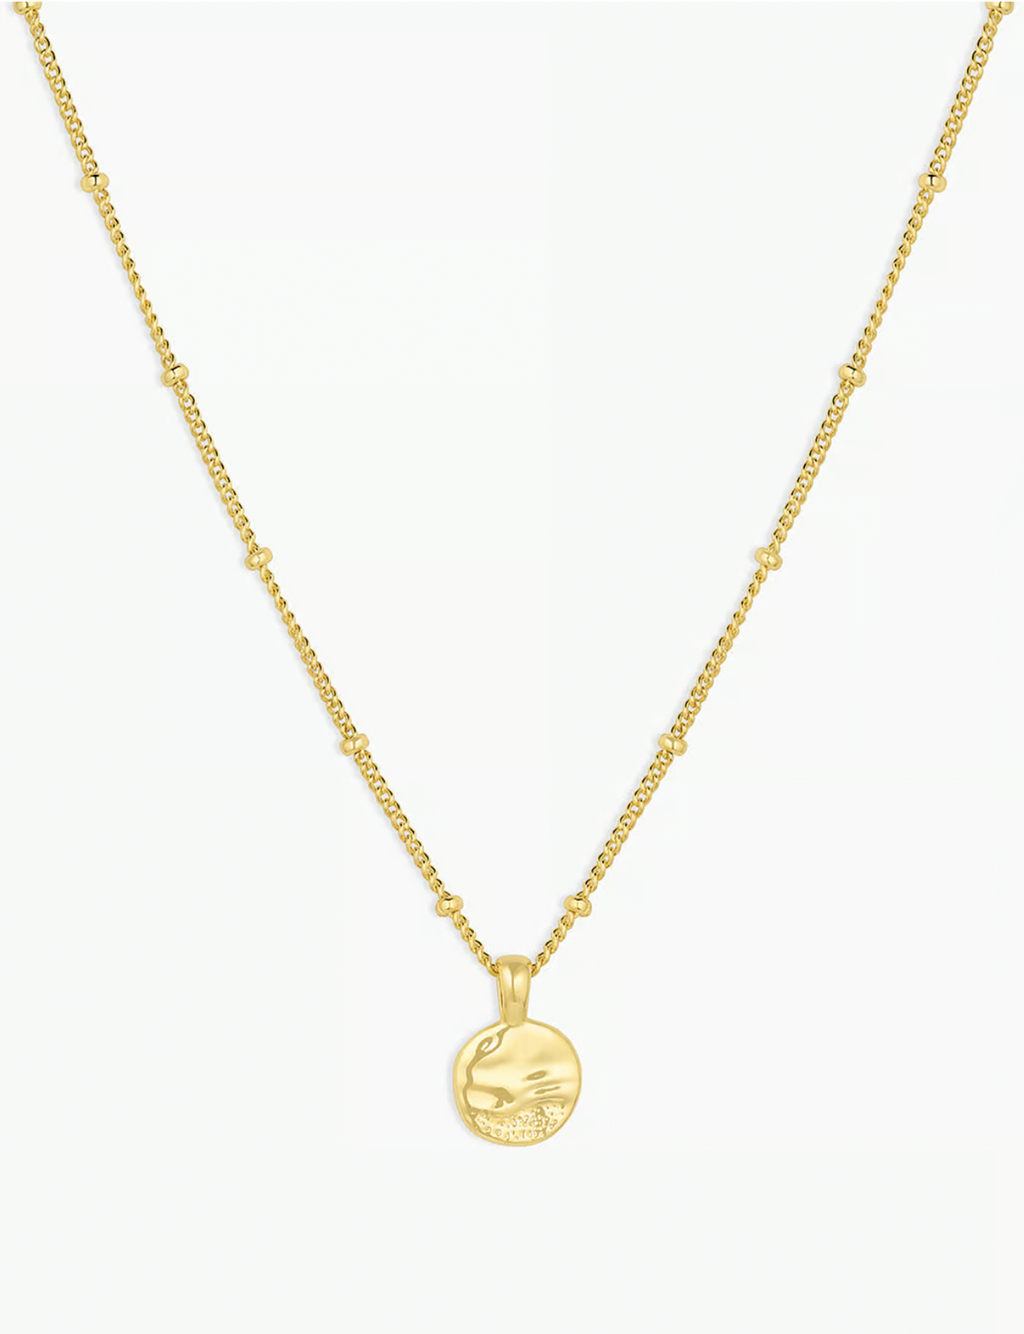 Shorebreak Necklace, Gold Plated